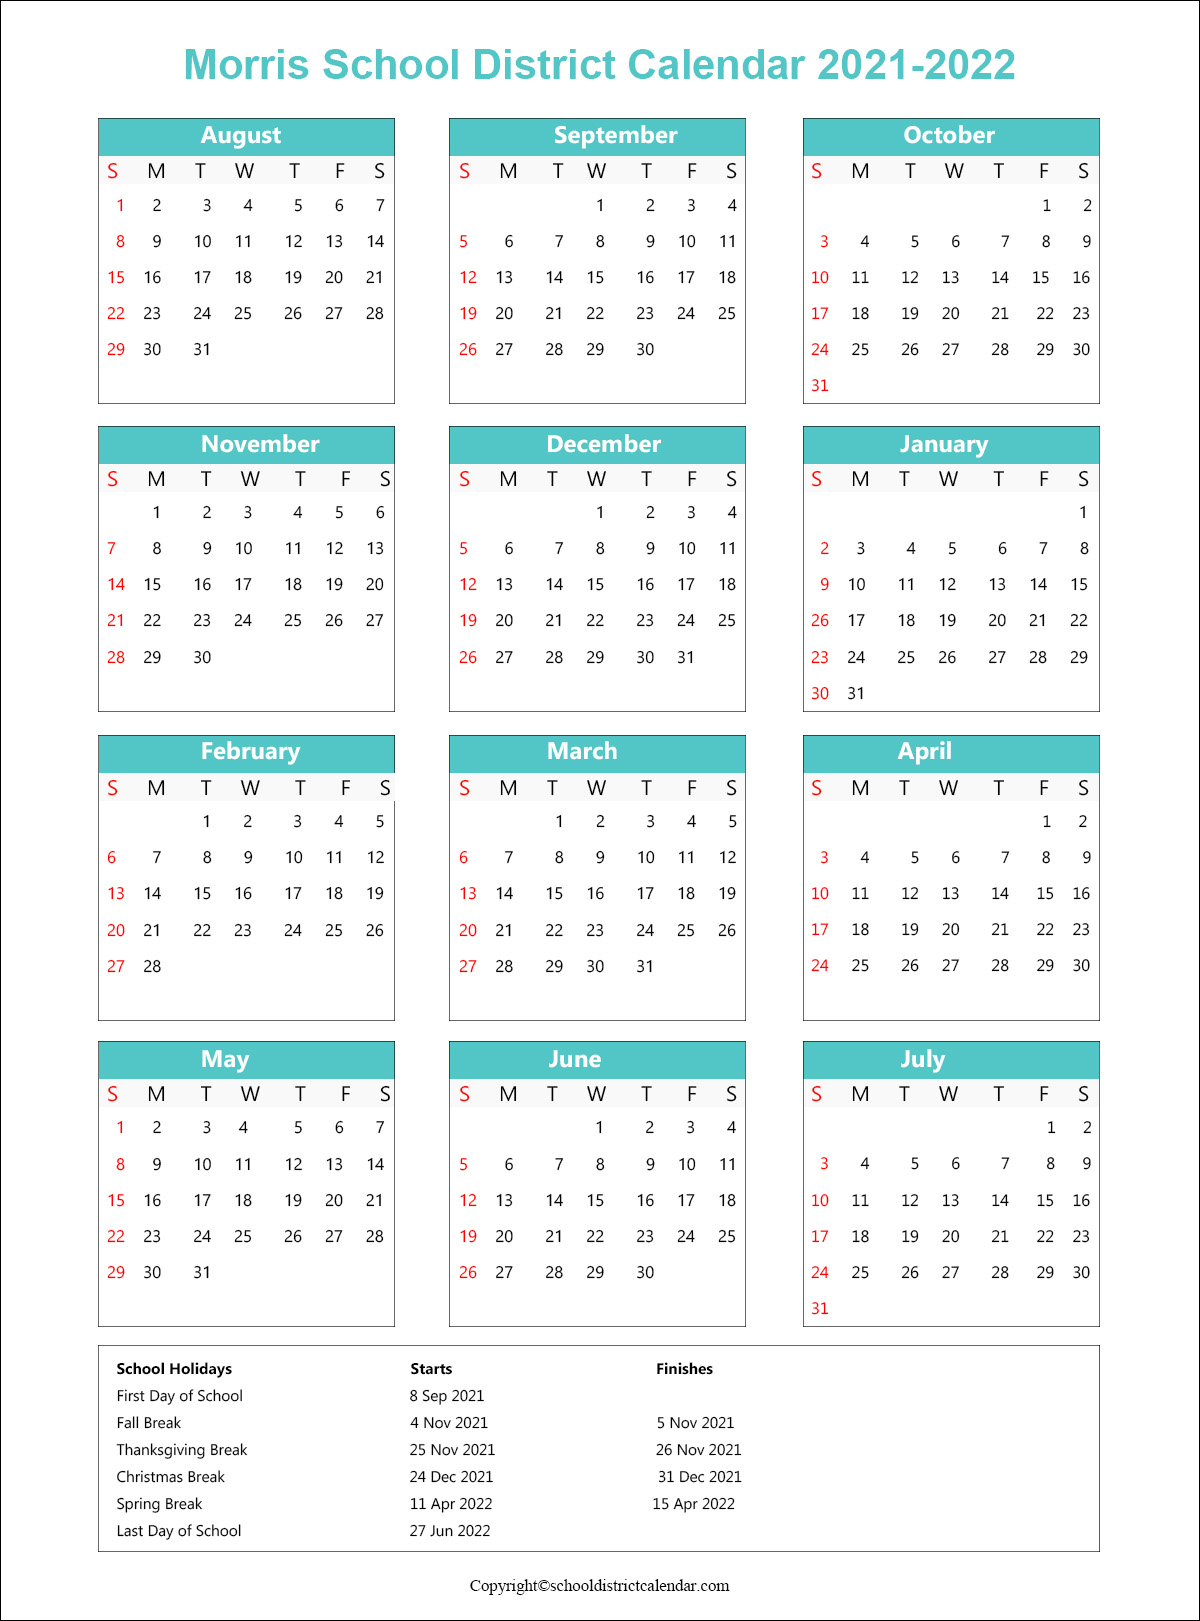 Morris School District Calendar 2021